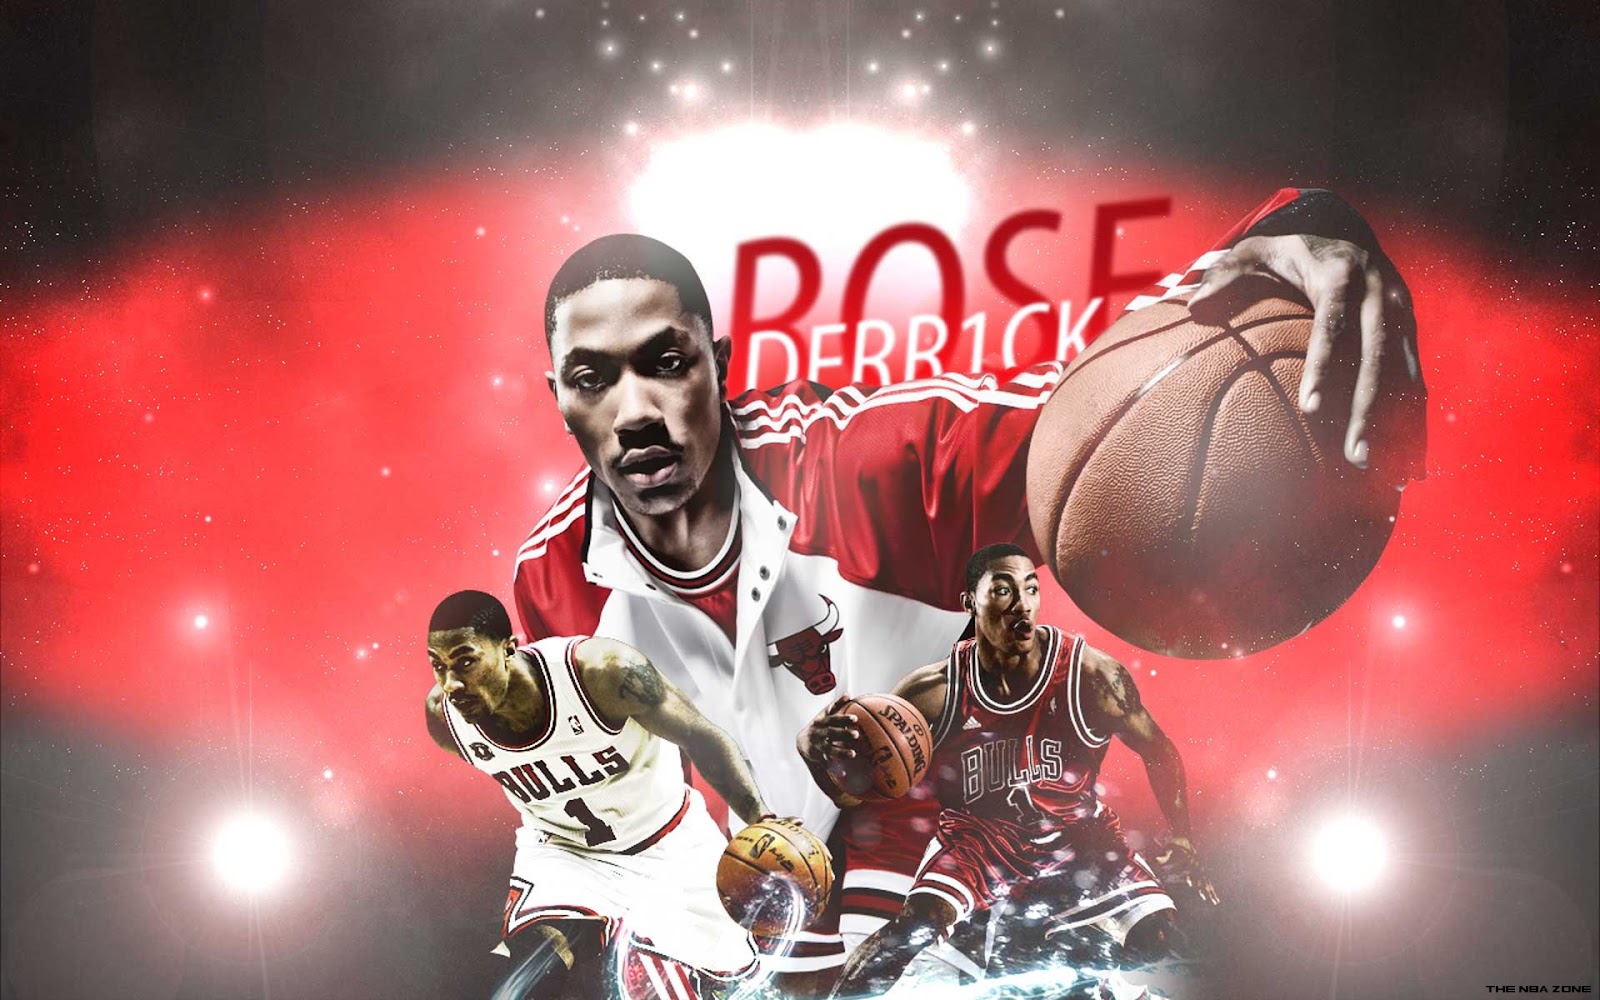 derrick rose wallpaper hd,basketball player,music artist,super bowl,basketball moves,slam dunk